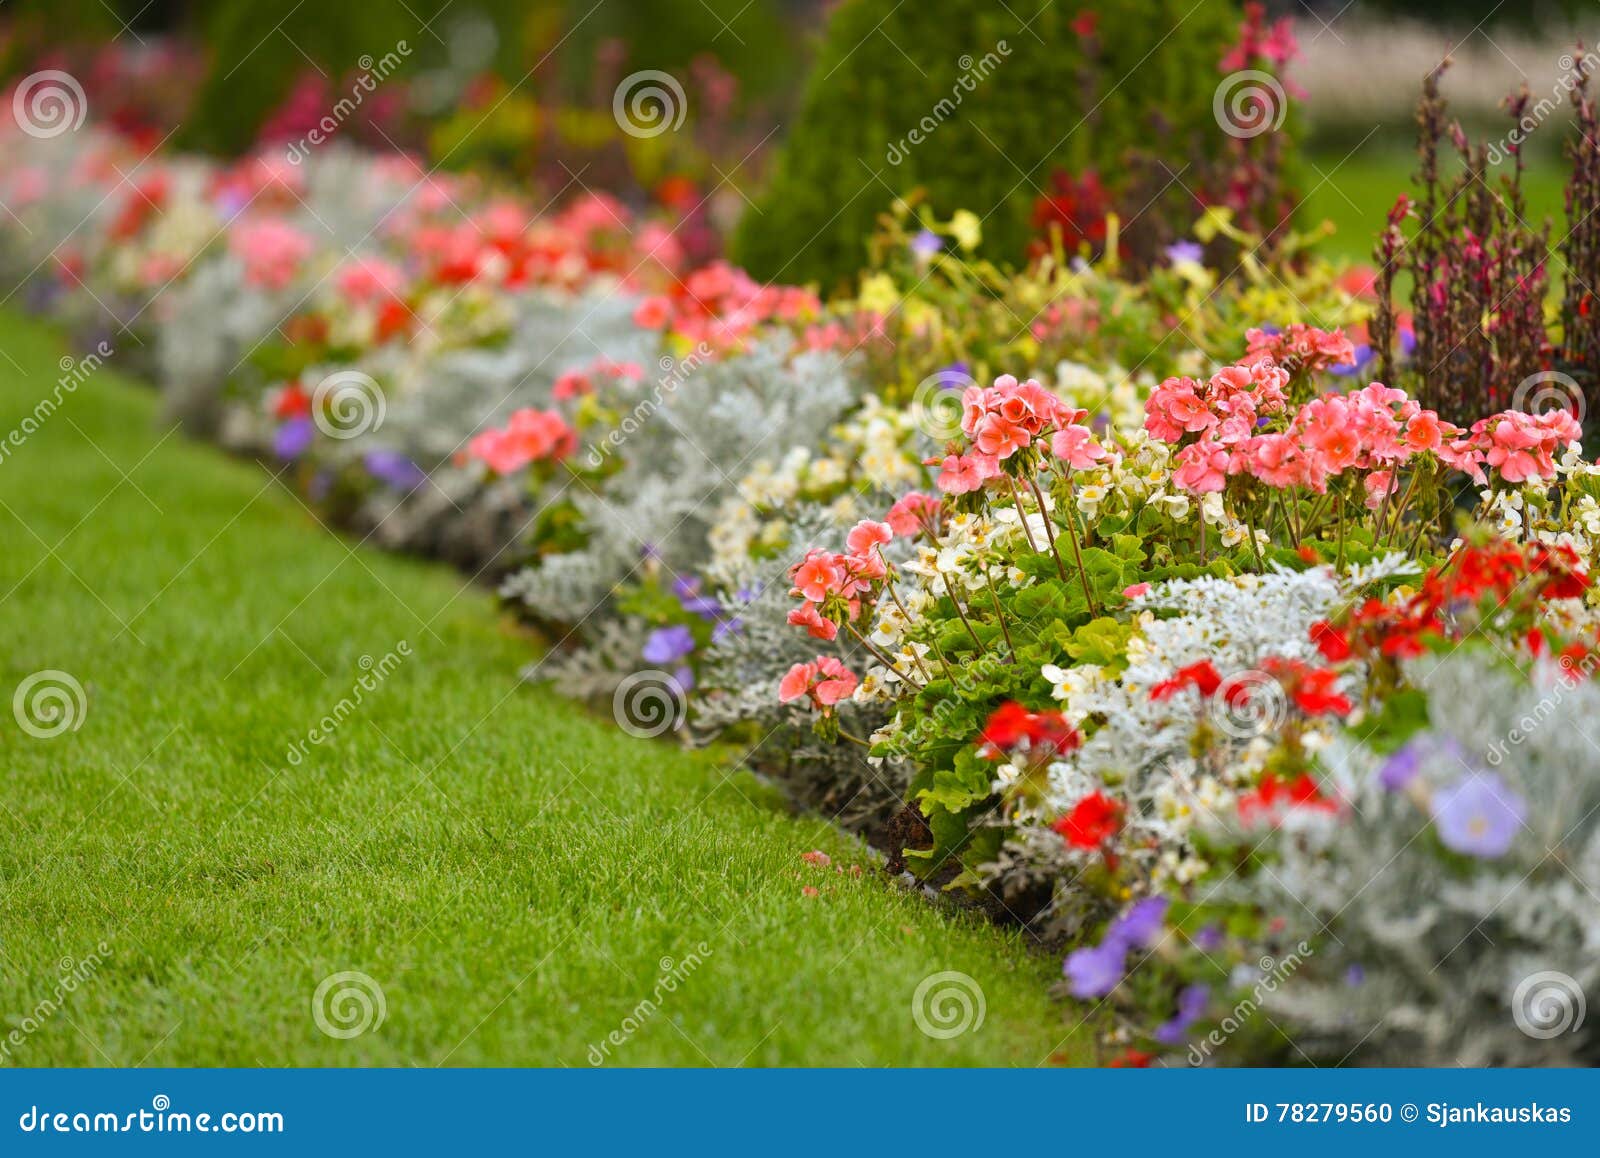 flowerbed in park